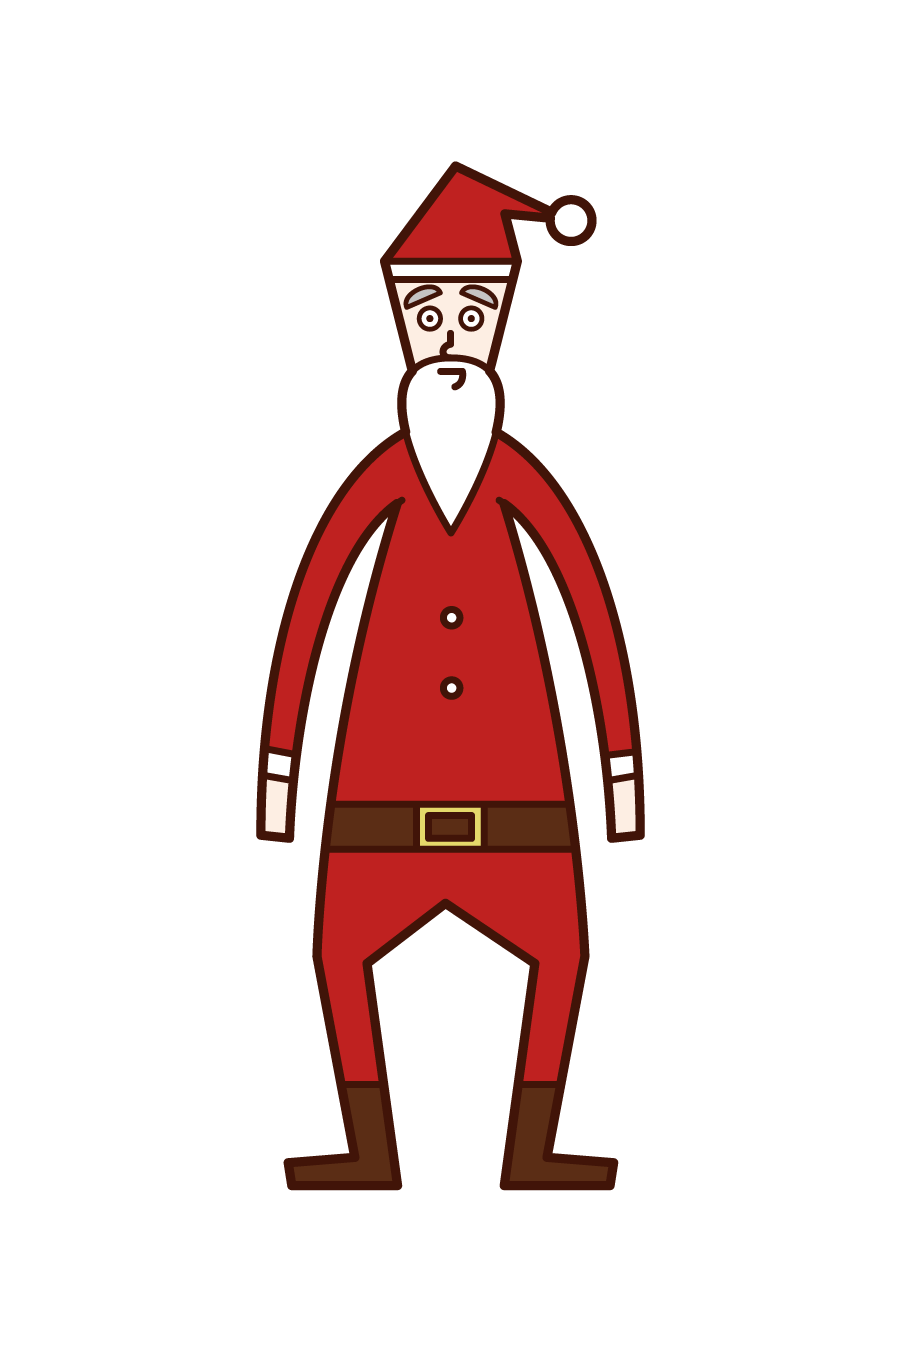 Illustrations of Santa Claus